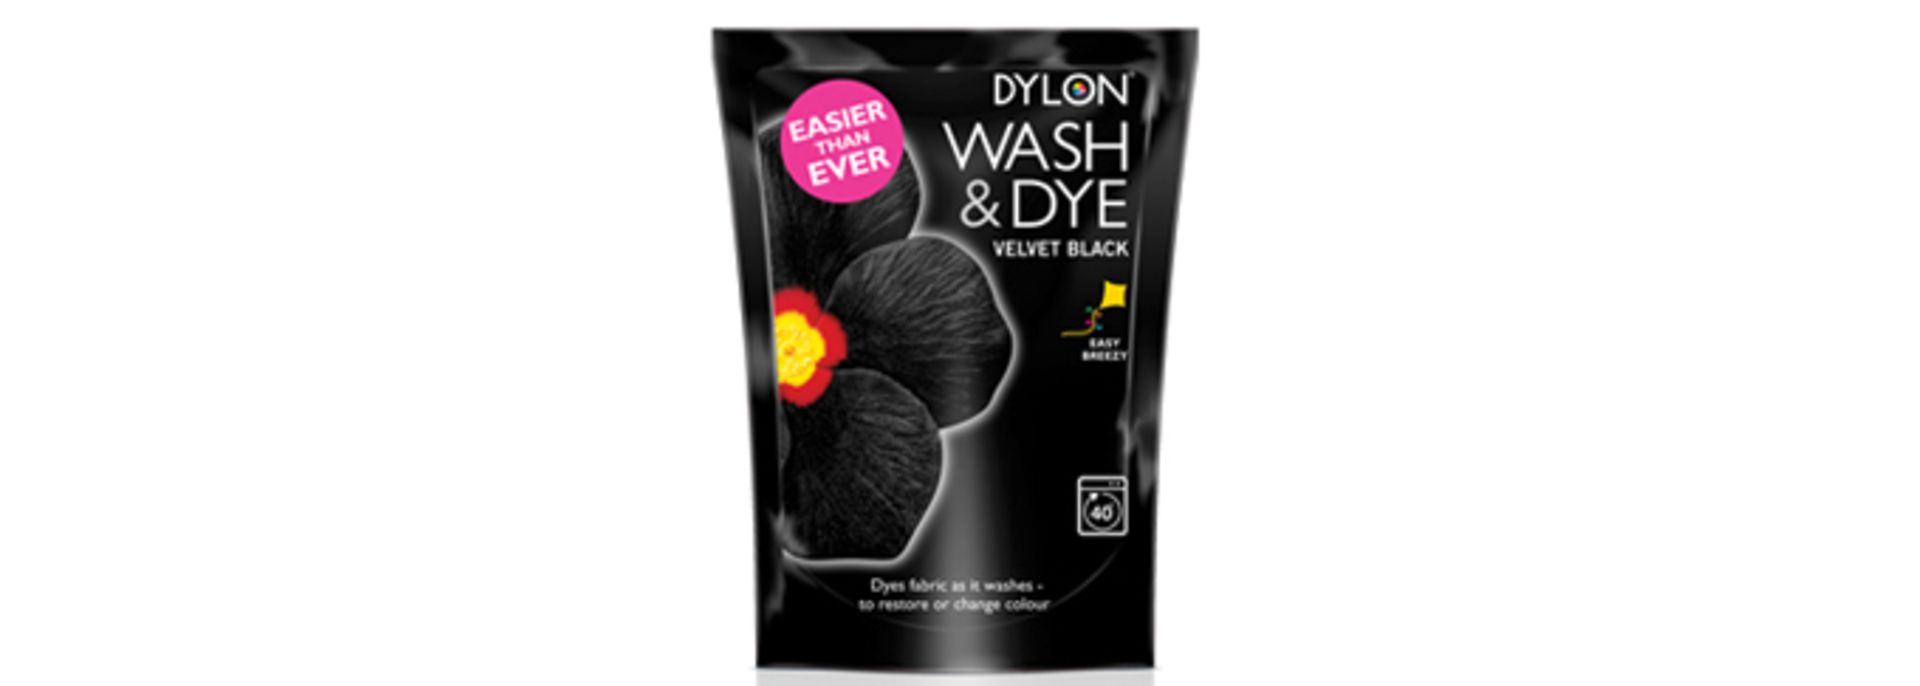 Laundry & Home Care brand Dylon